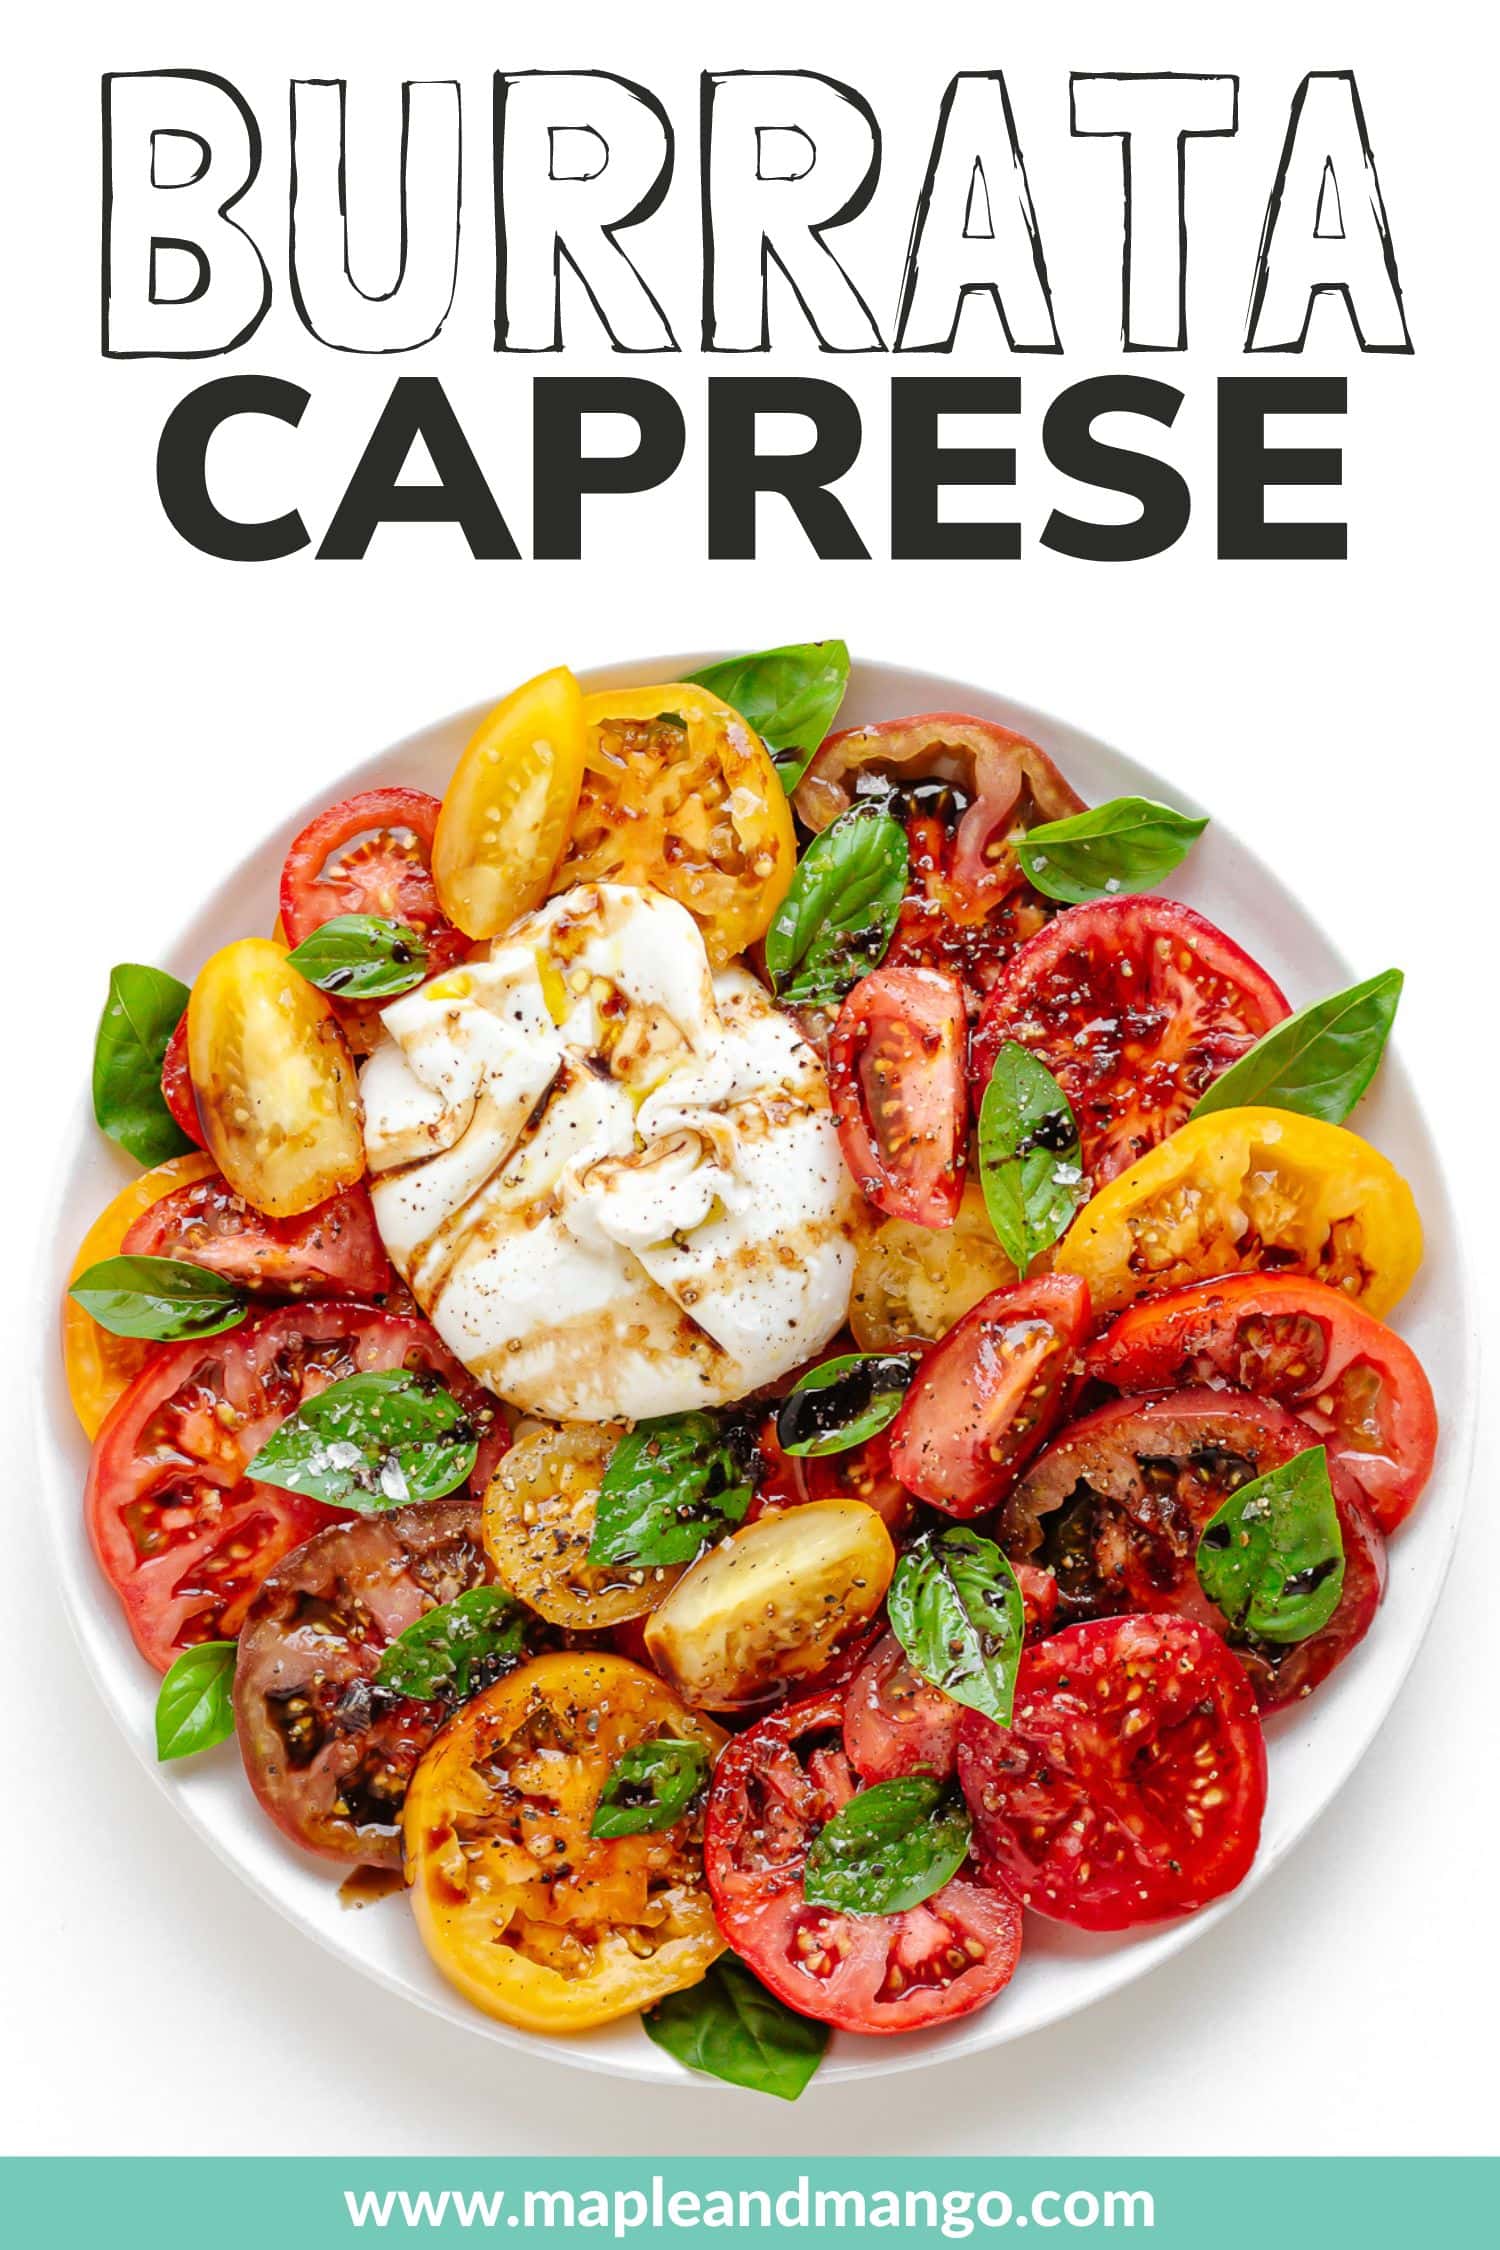 Burrata and tomato salad on a white plate with text overlay "Burrata Caprese".